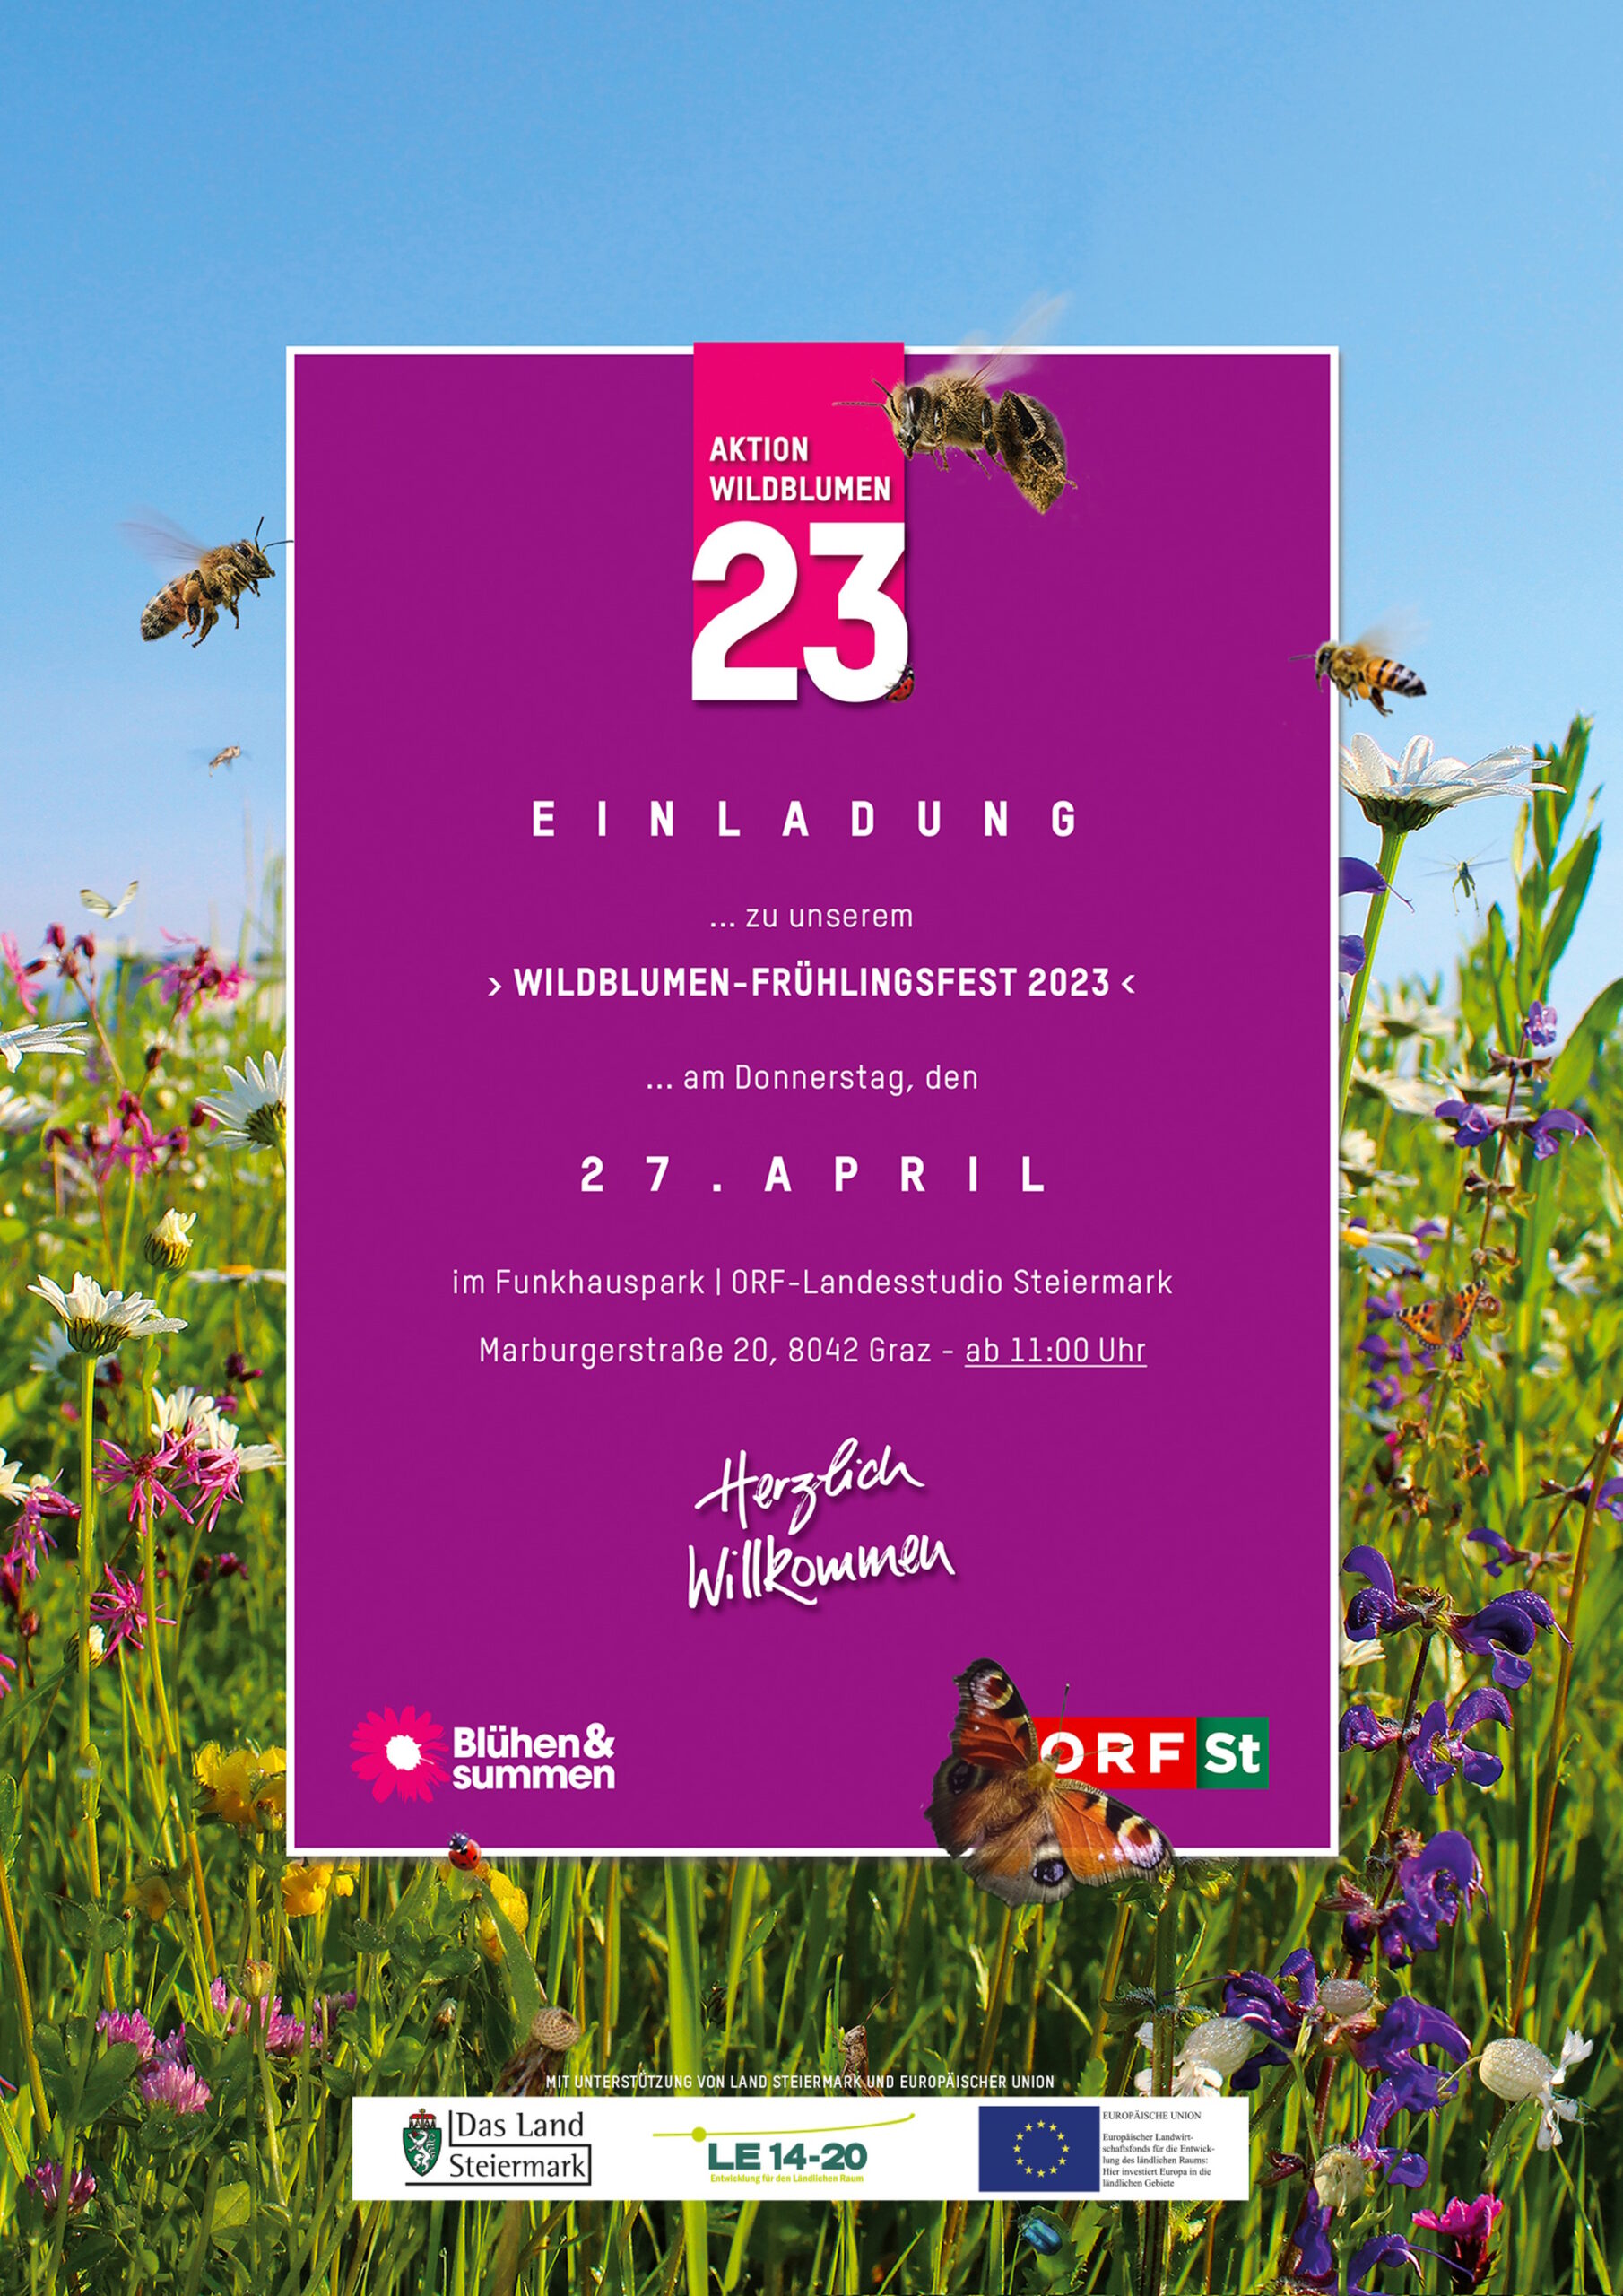 Wildblumen-Frühlingsfest 2023 Steiermark in Graz